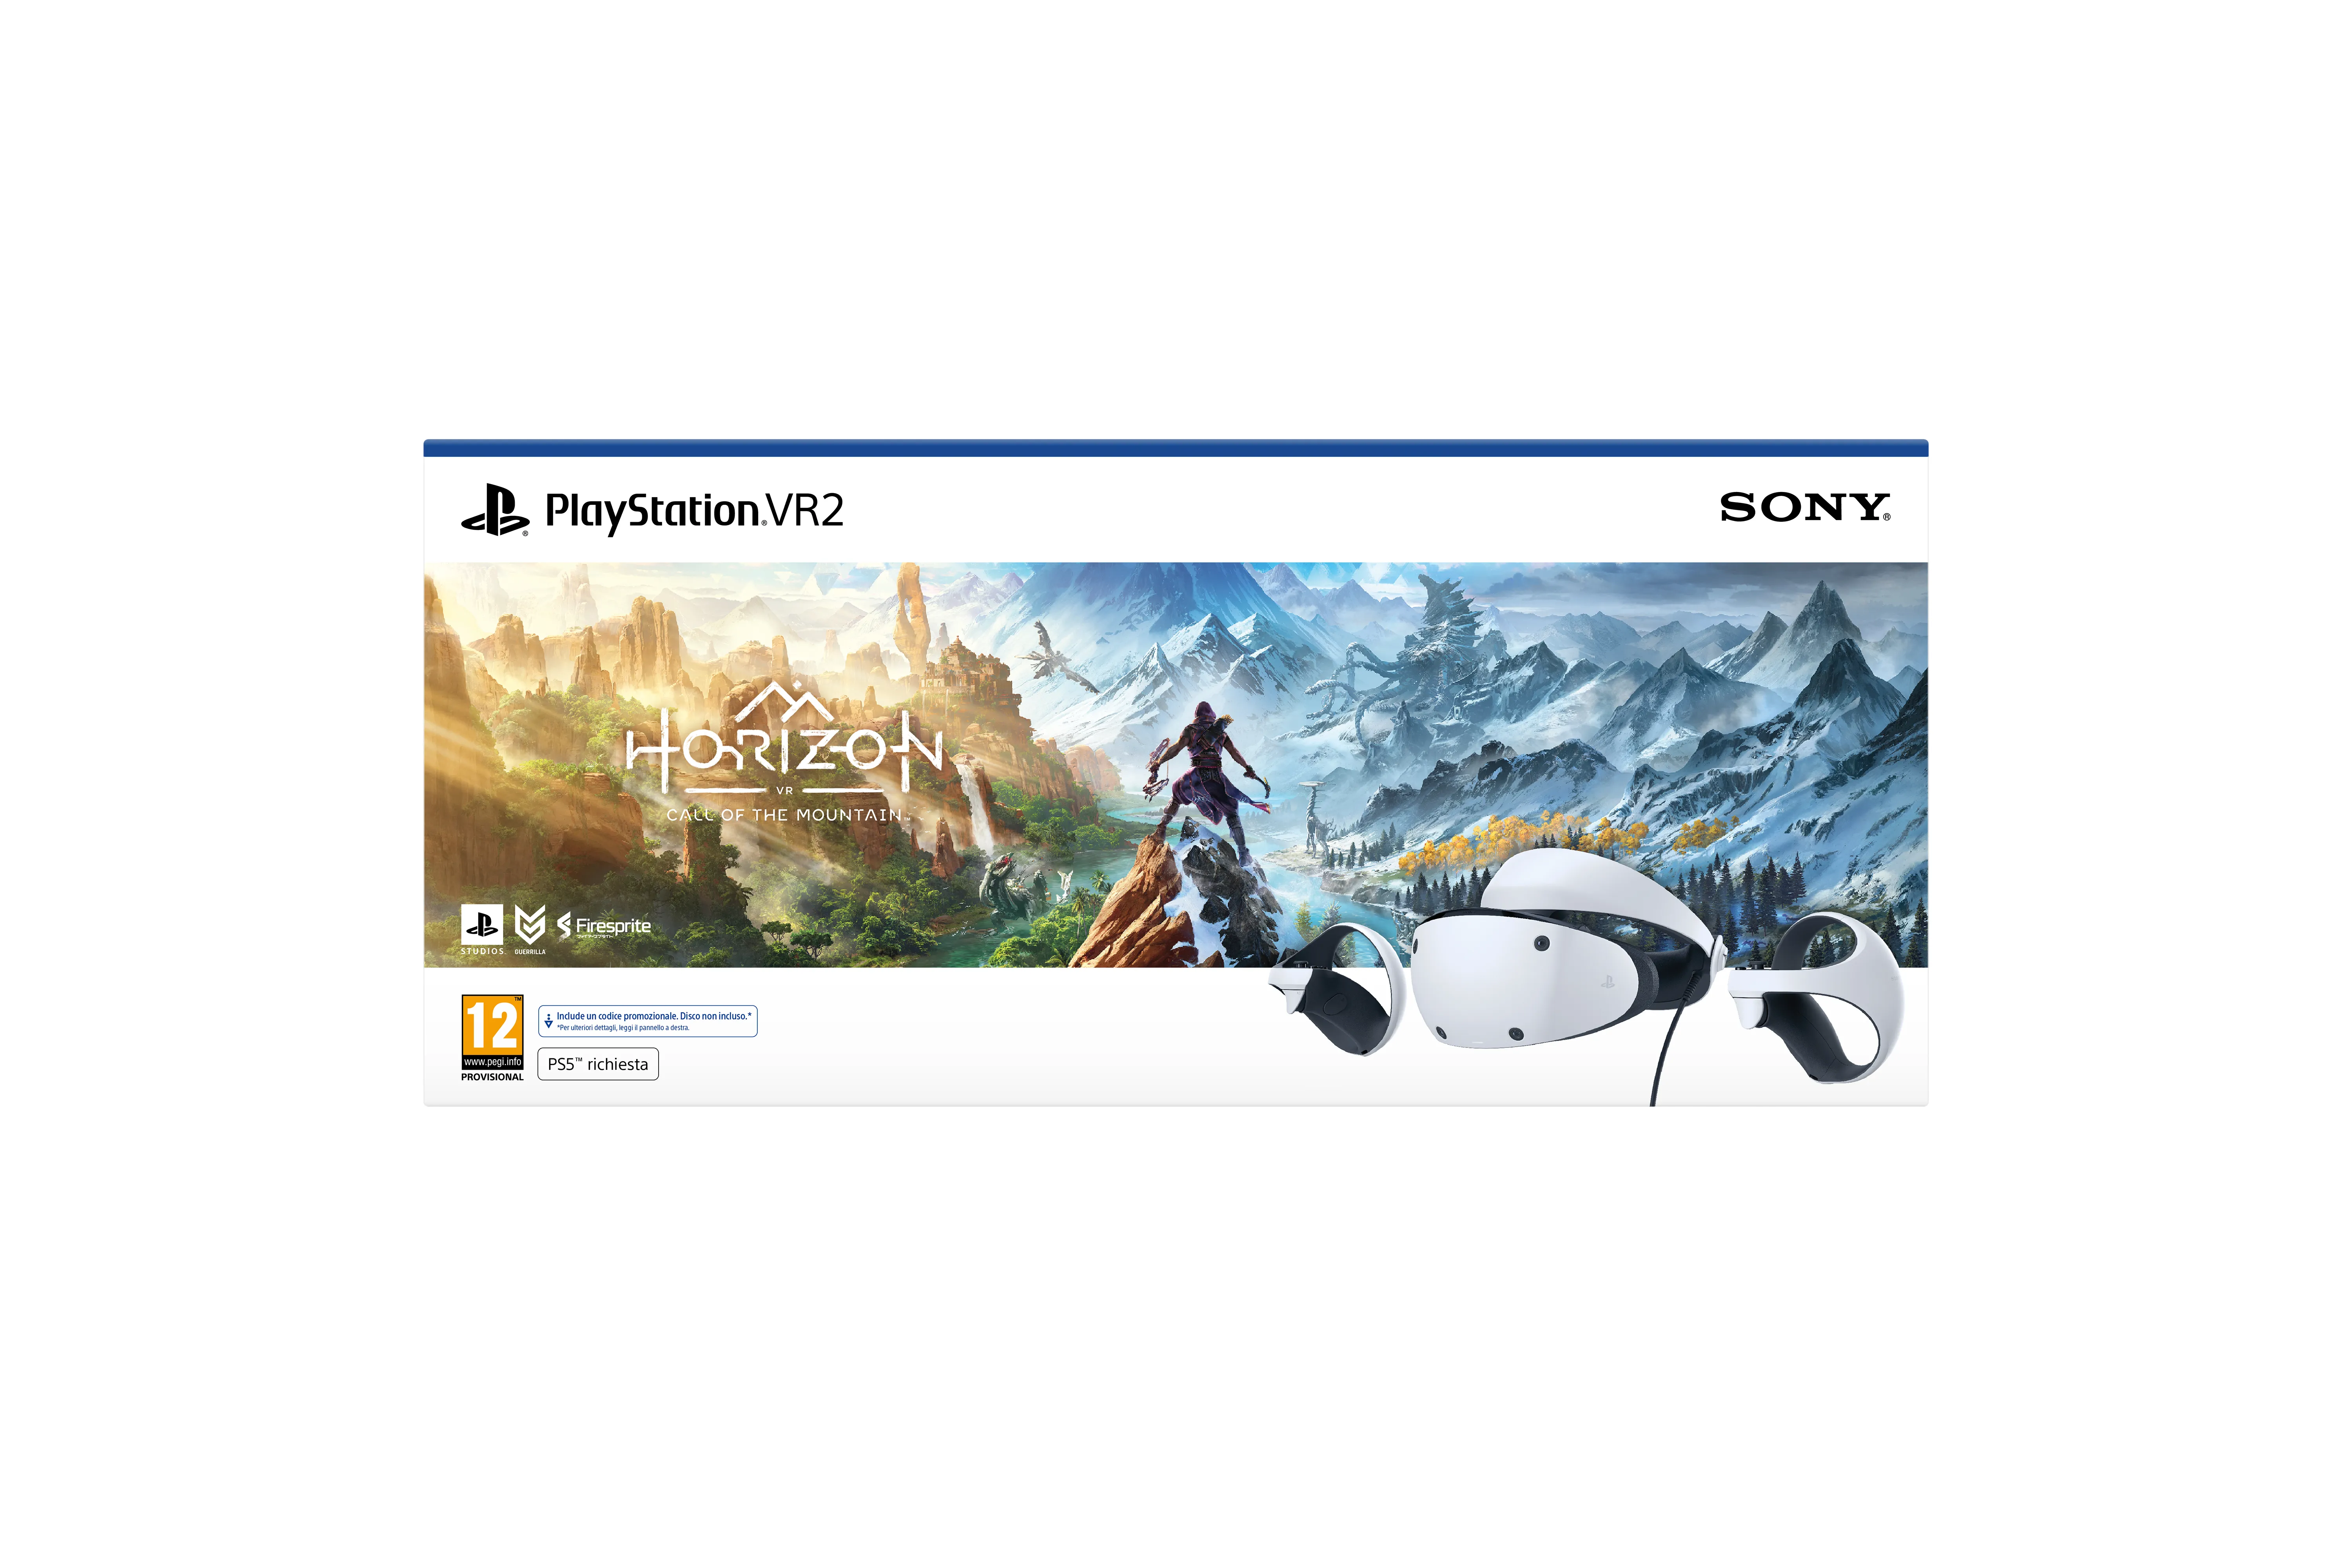  PlayStation VR2 + Voucher Horizon Call of the Mountain Occhiali immersivi FPV Nero, Bianco